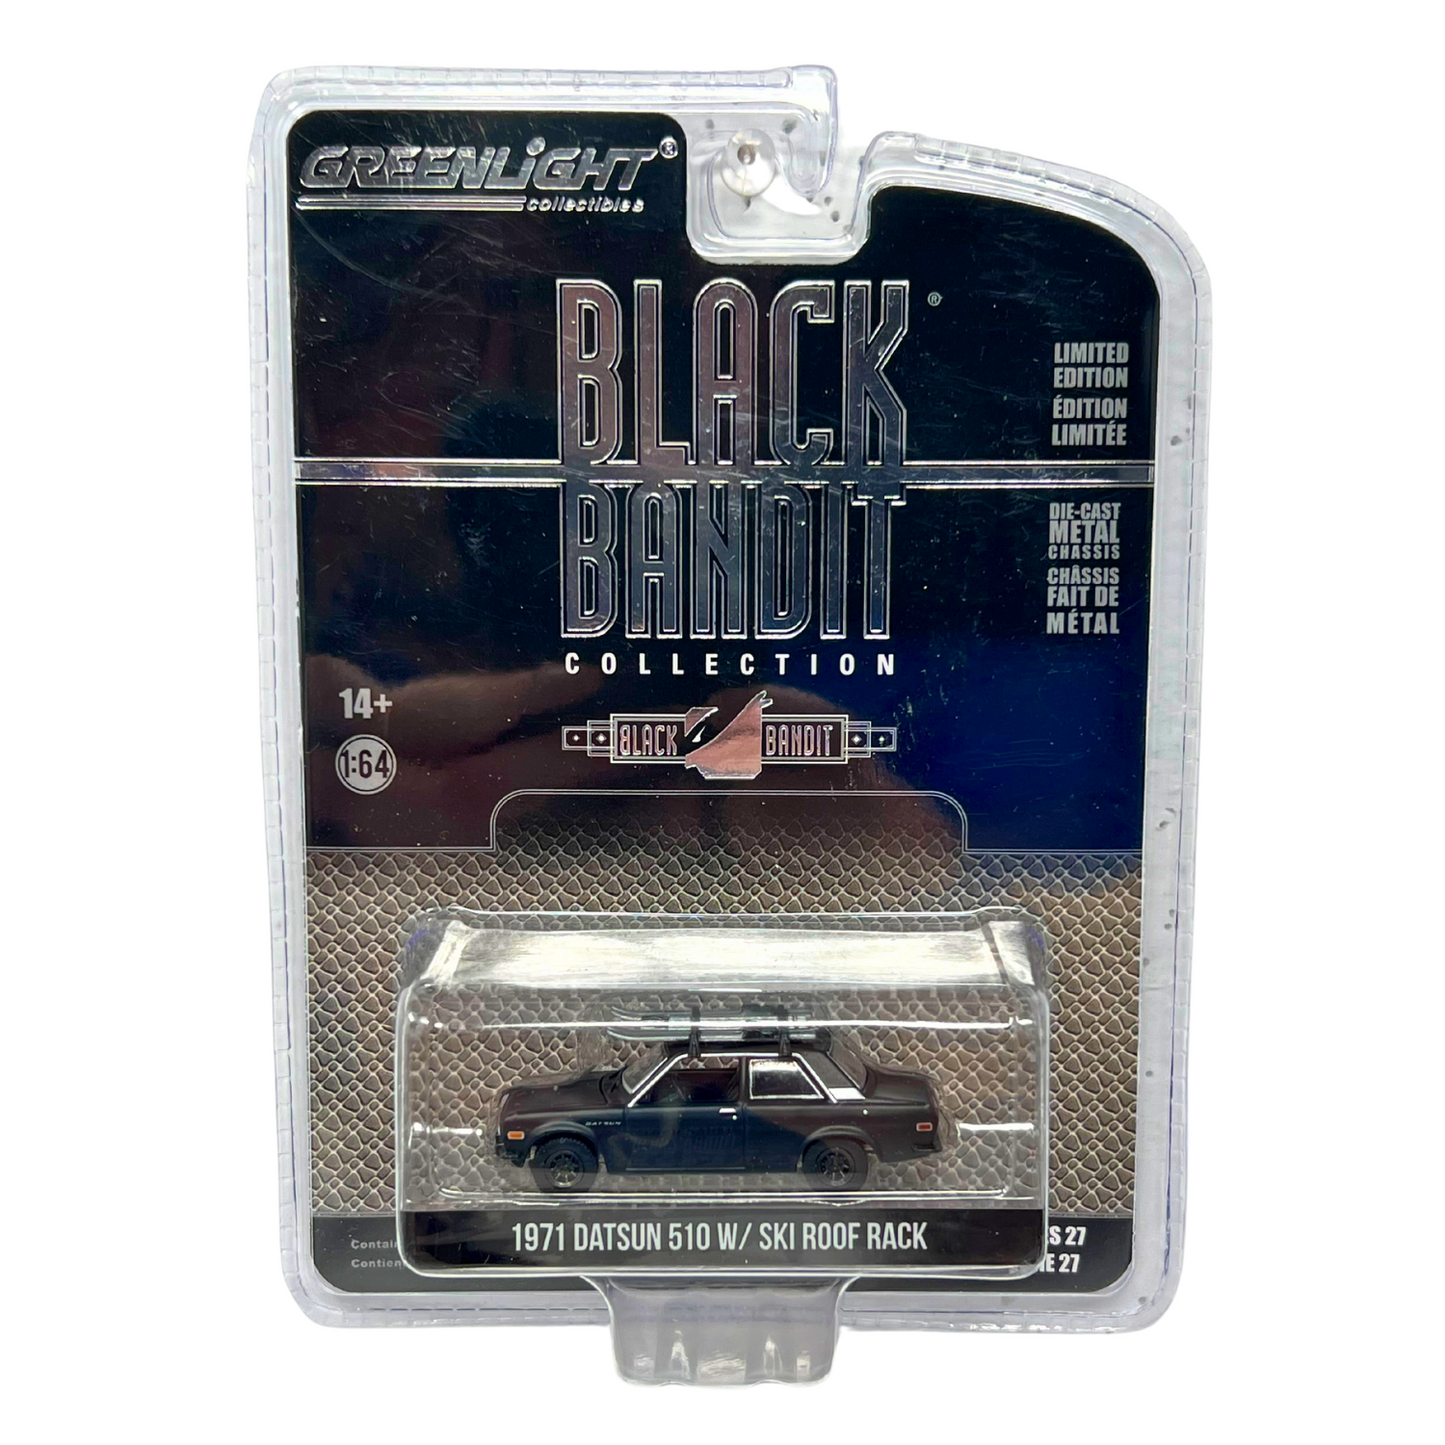 Greenlight Black Bandit 1971 Datsun 510 w Ski Roof Rack 1:64 Diecast V3